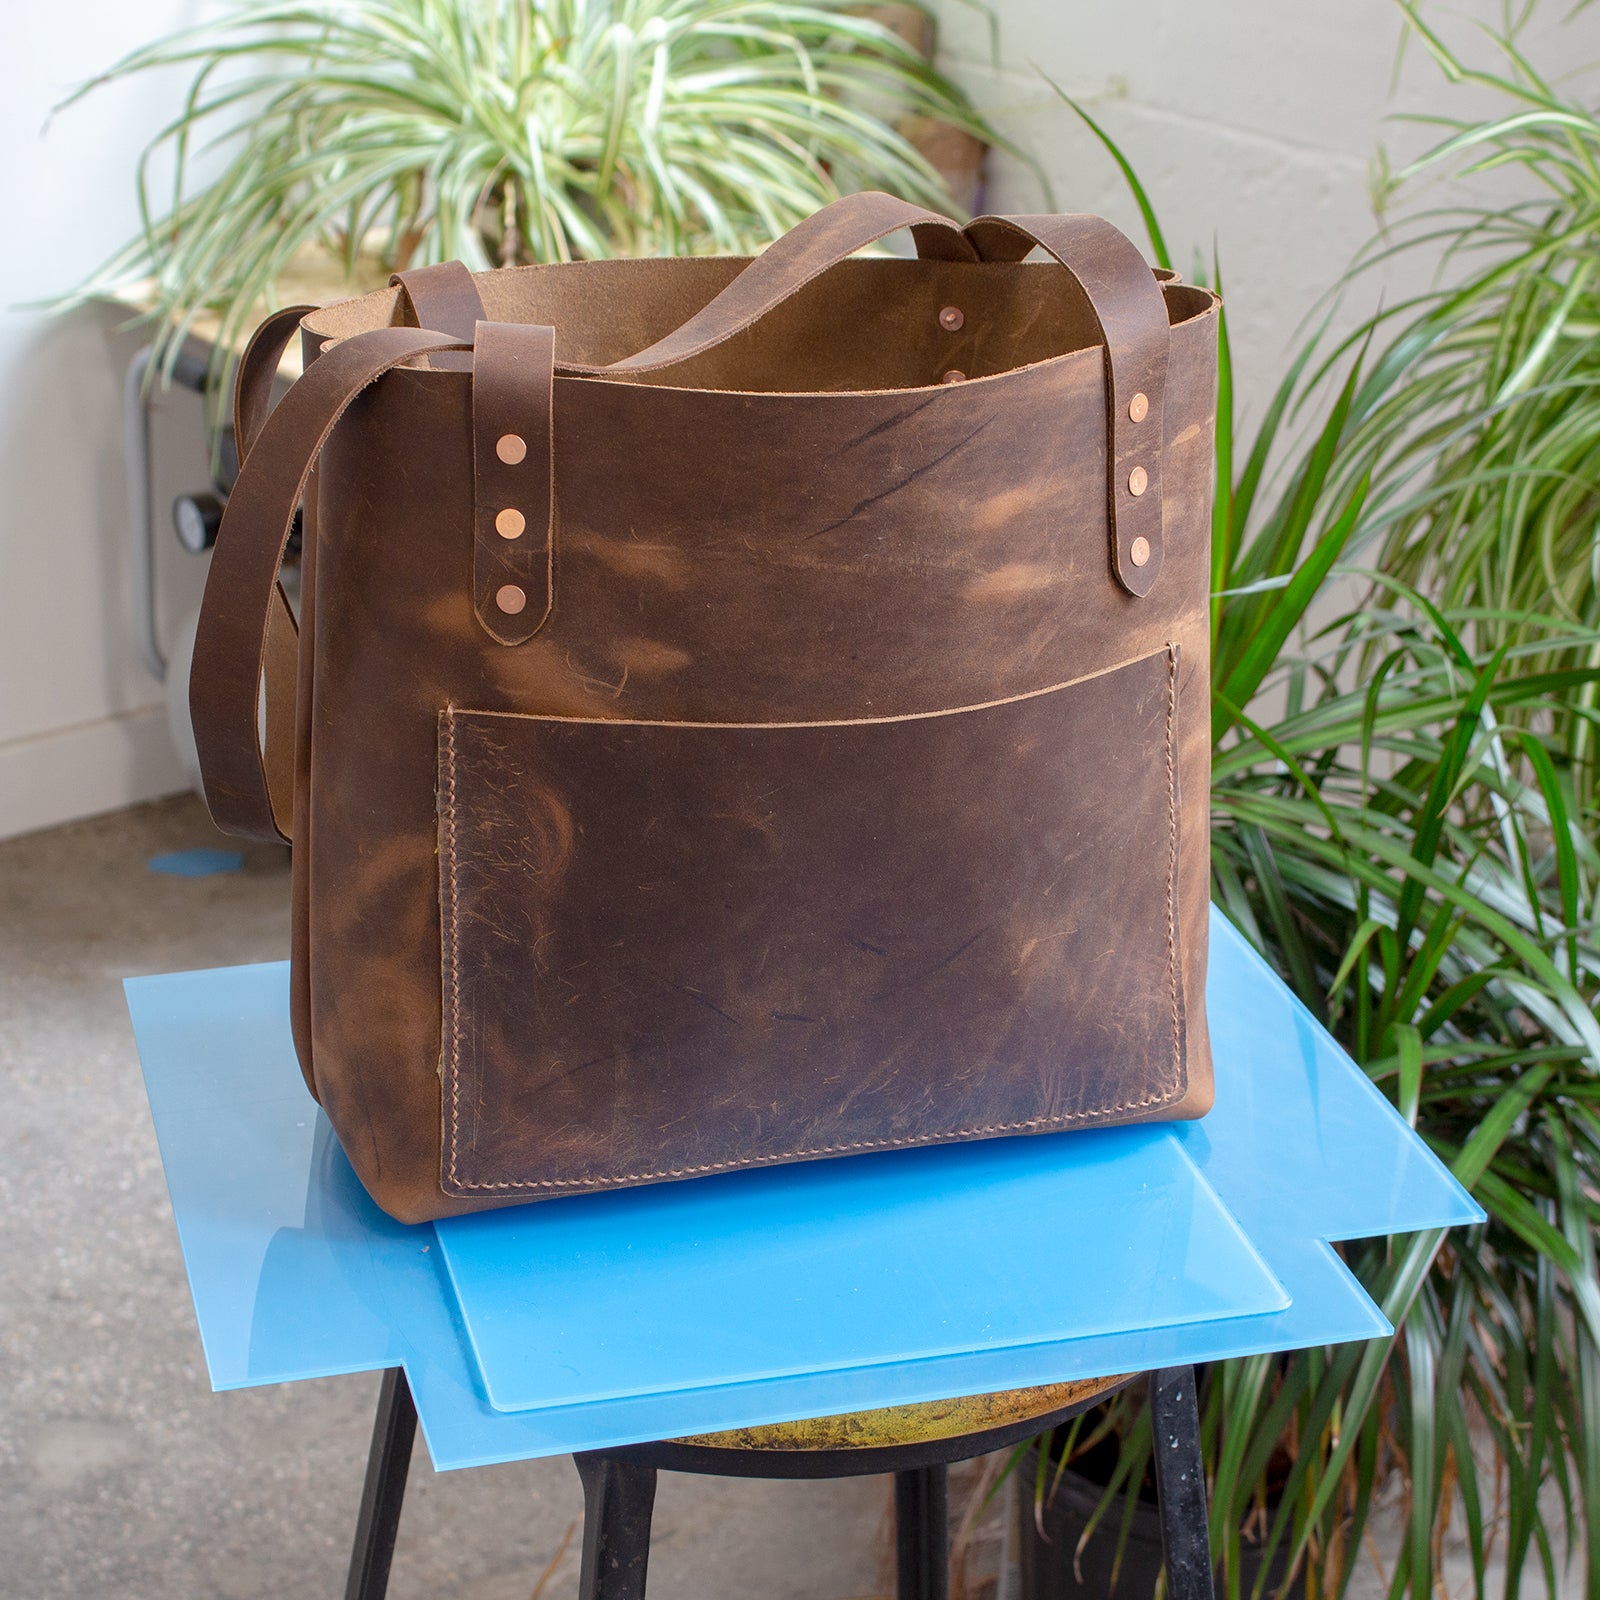 Buy Soperwillton Fashion Handbag for Women Shoulder Bag Top Handle Satchel  Hobo Tote Bag Purse Set 4pcs at Amazon.in